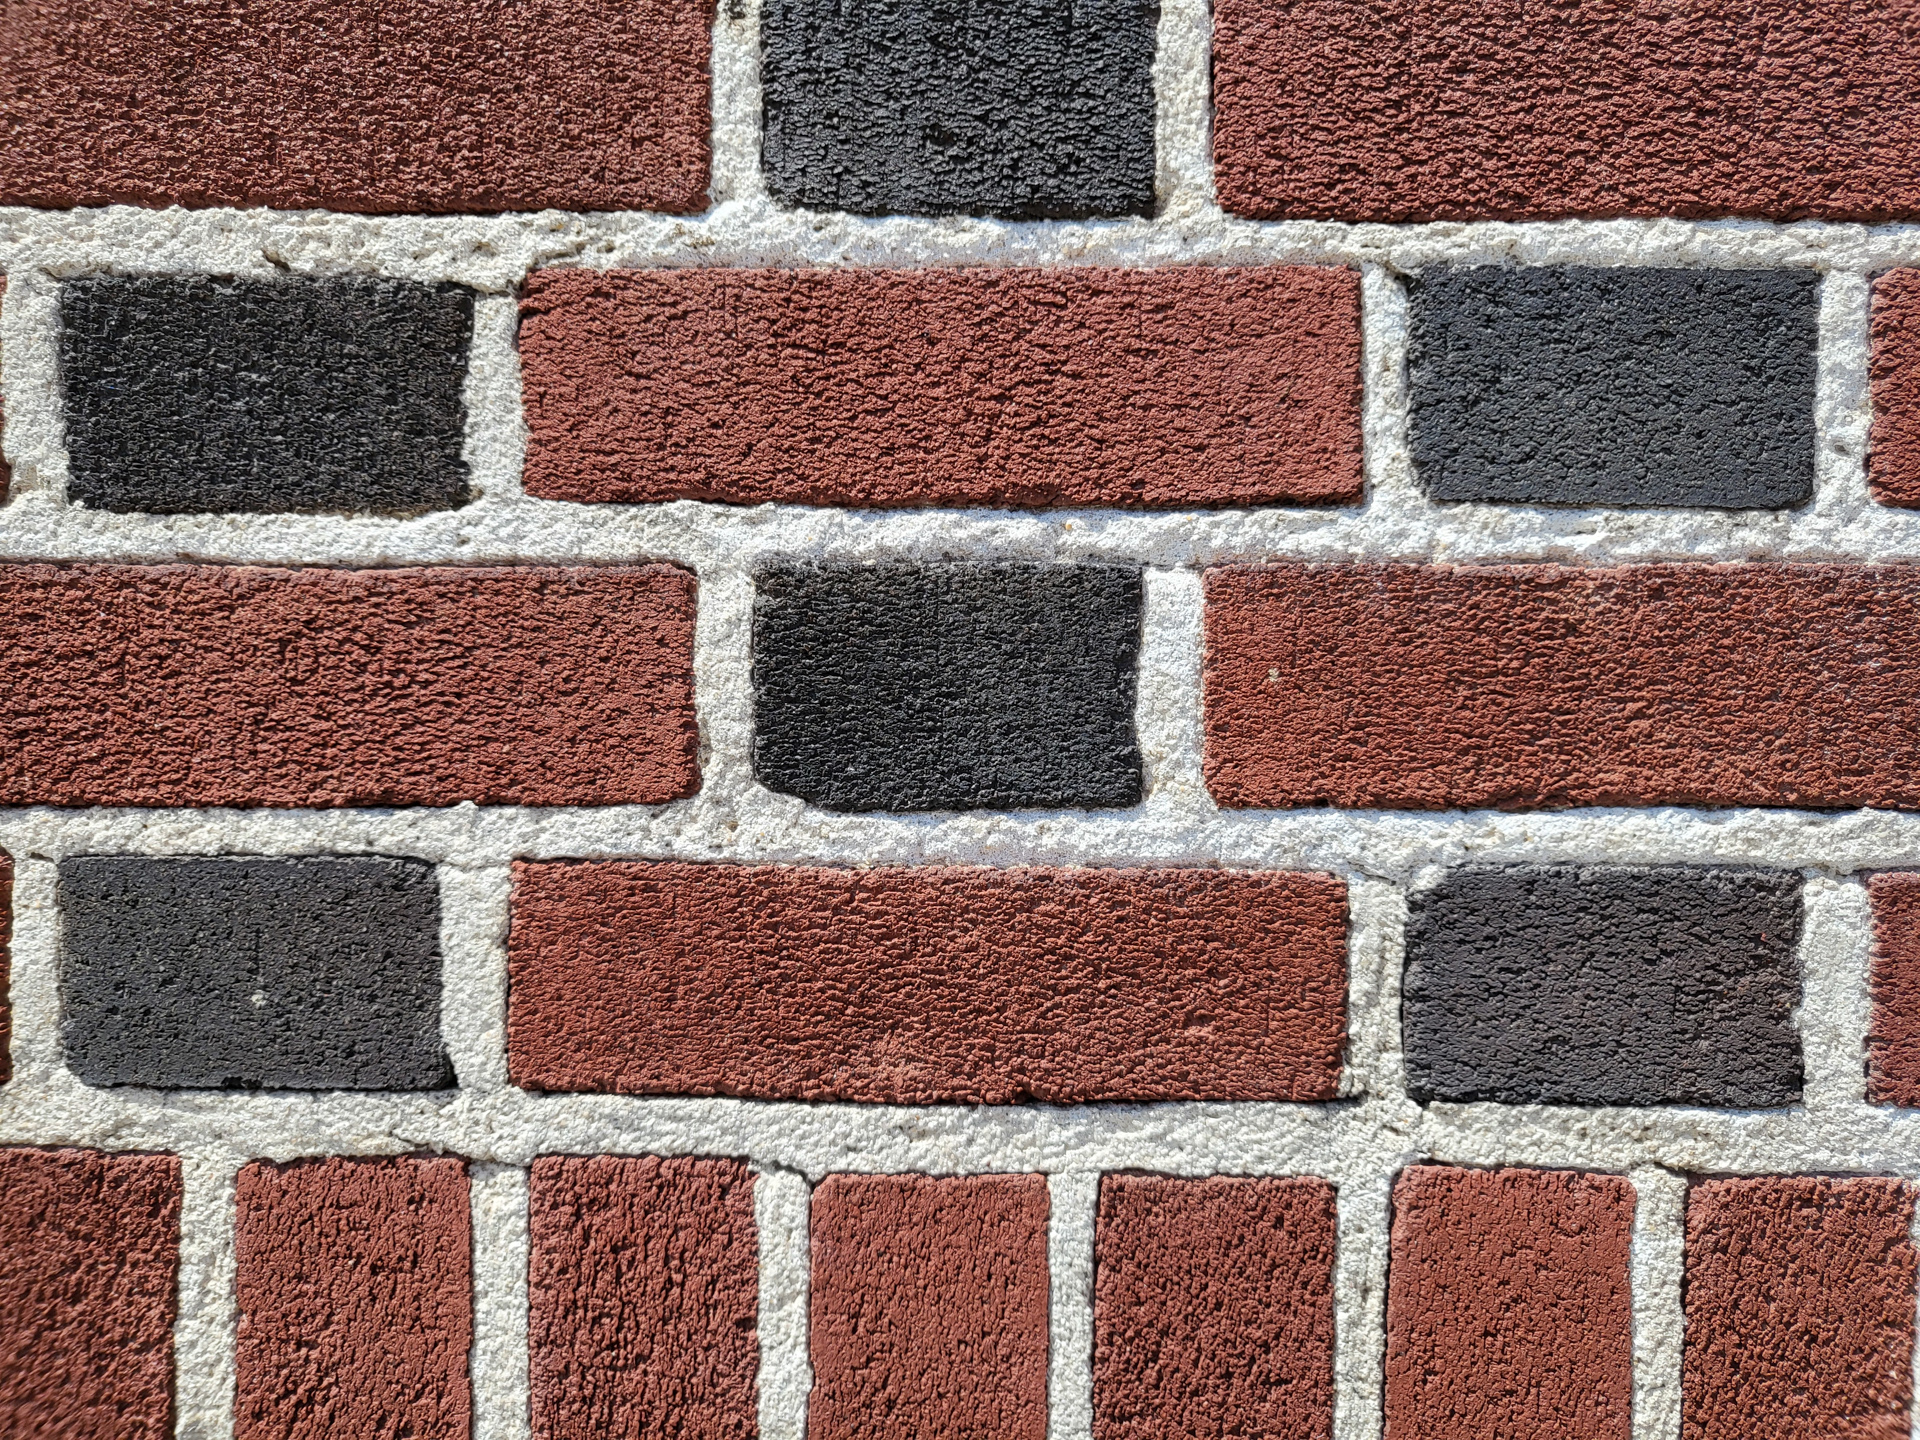 Samsung Galaxy Z Flip 3 photo sample brick wall